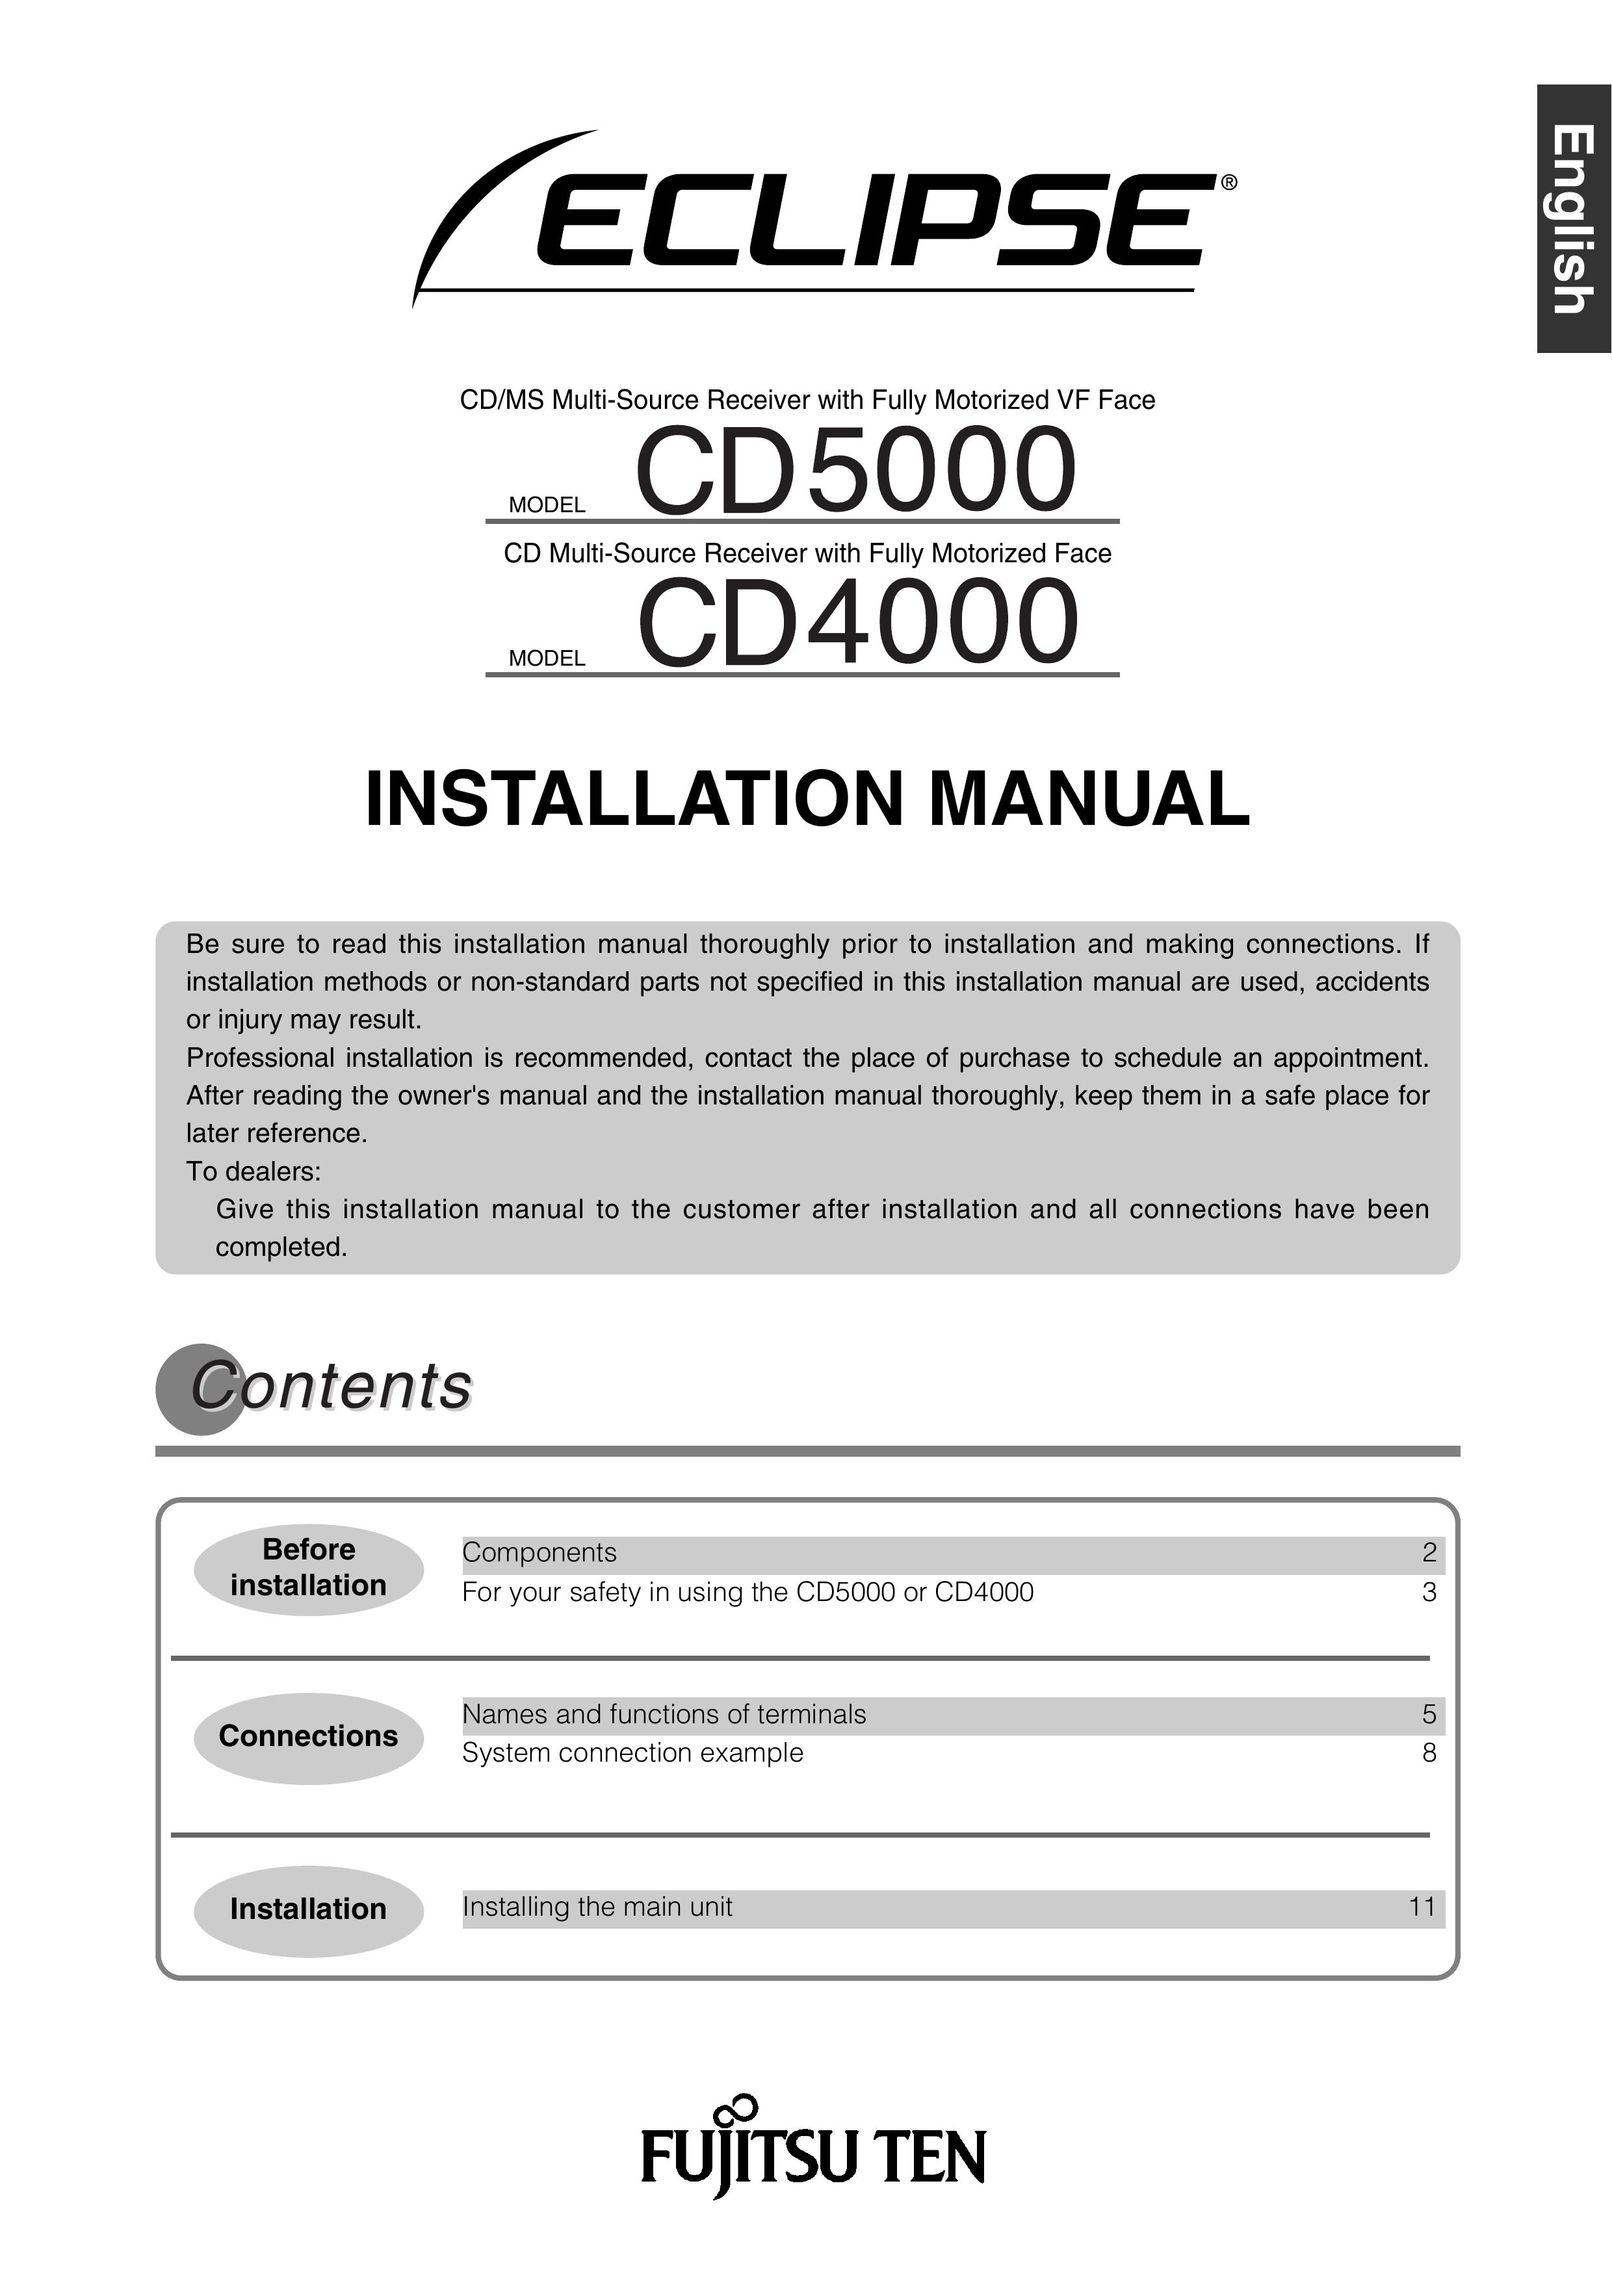 Eclipse - Fujitsu Ten CD5000 Car Stereo System User Manual